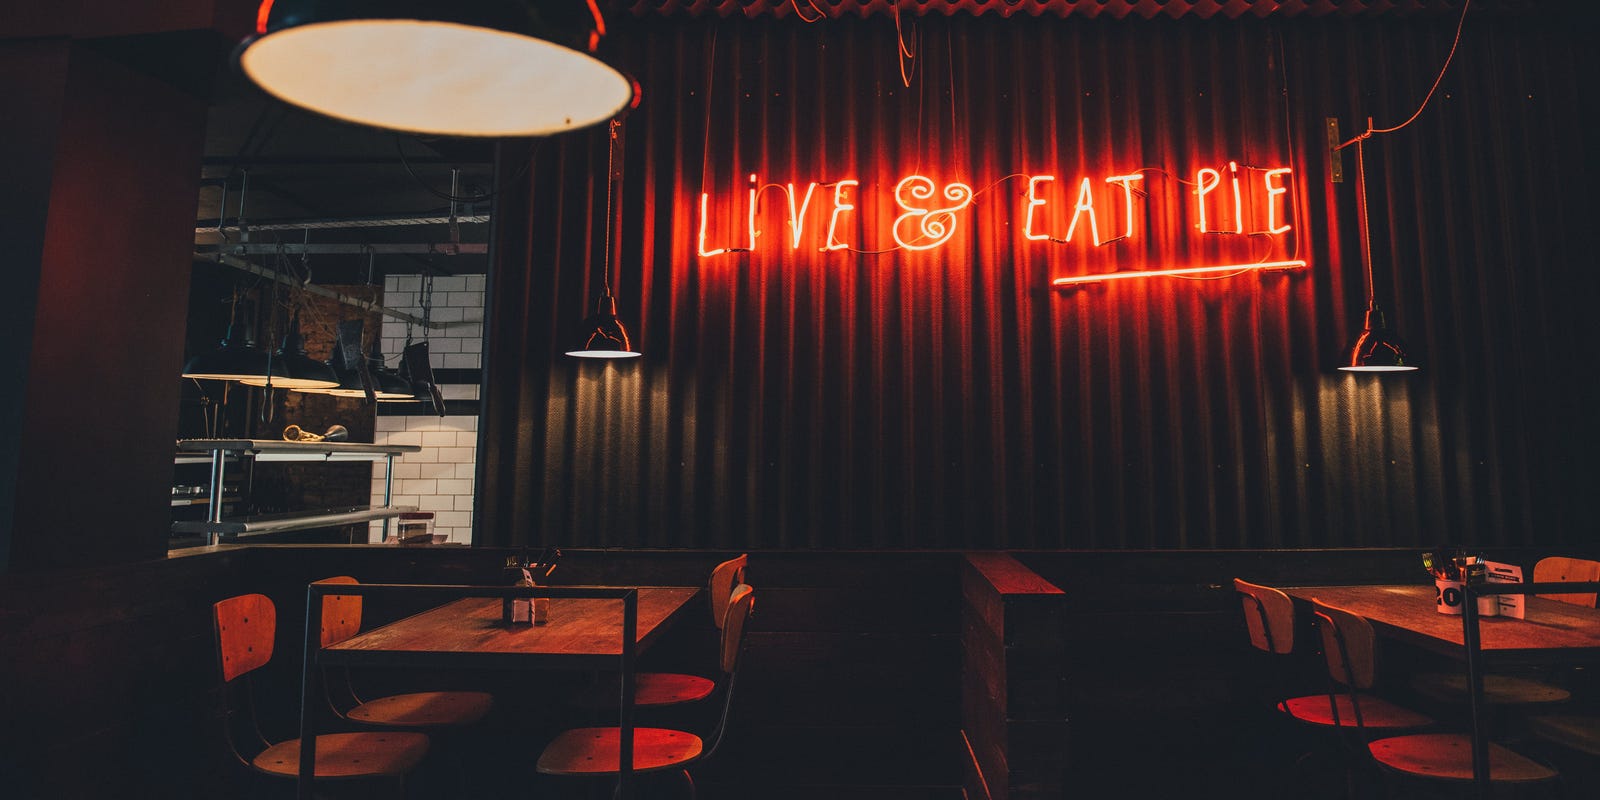 Restaurants and bars' best neon signs